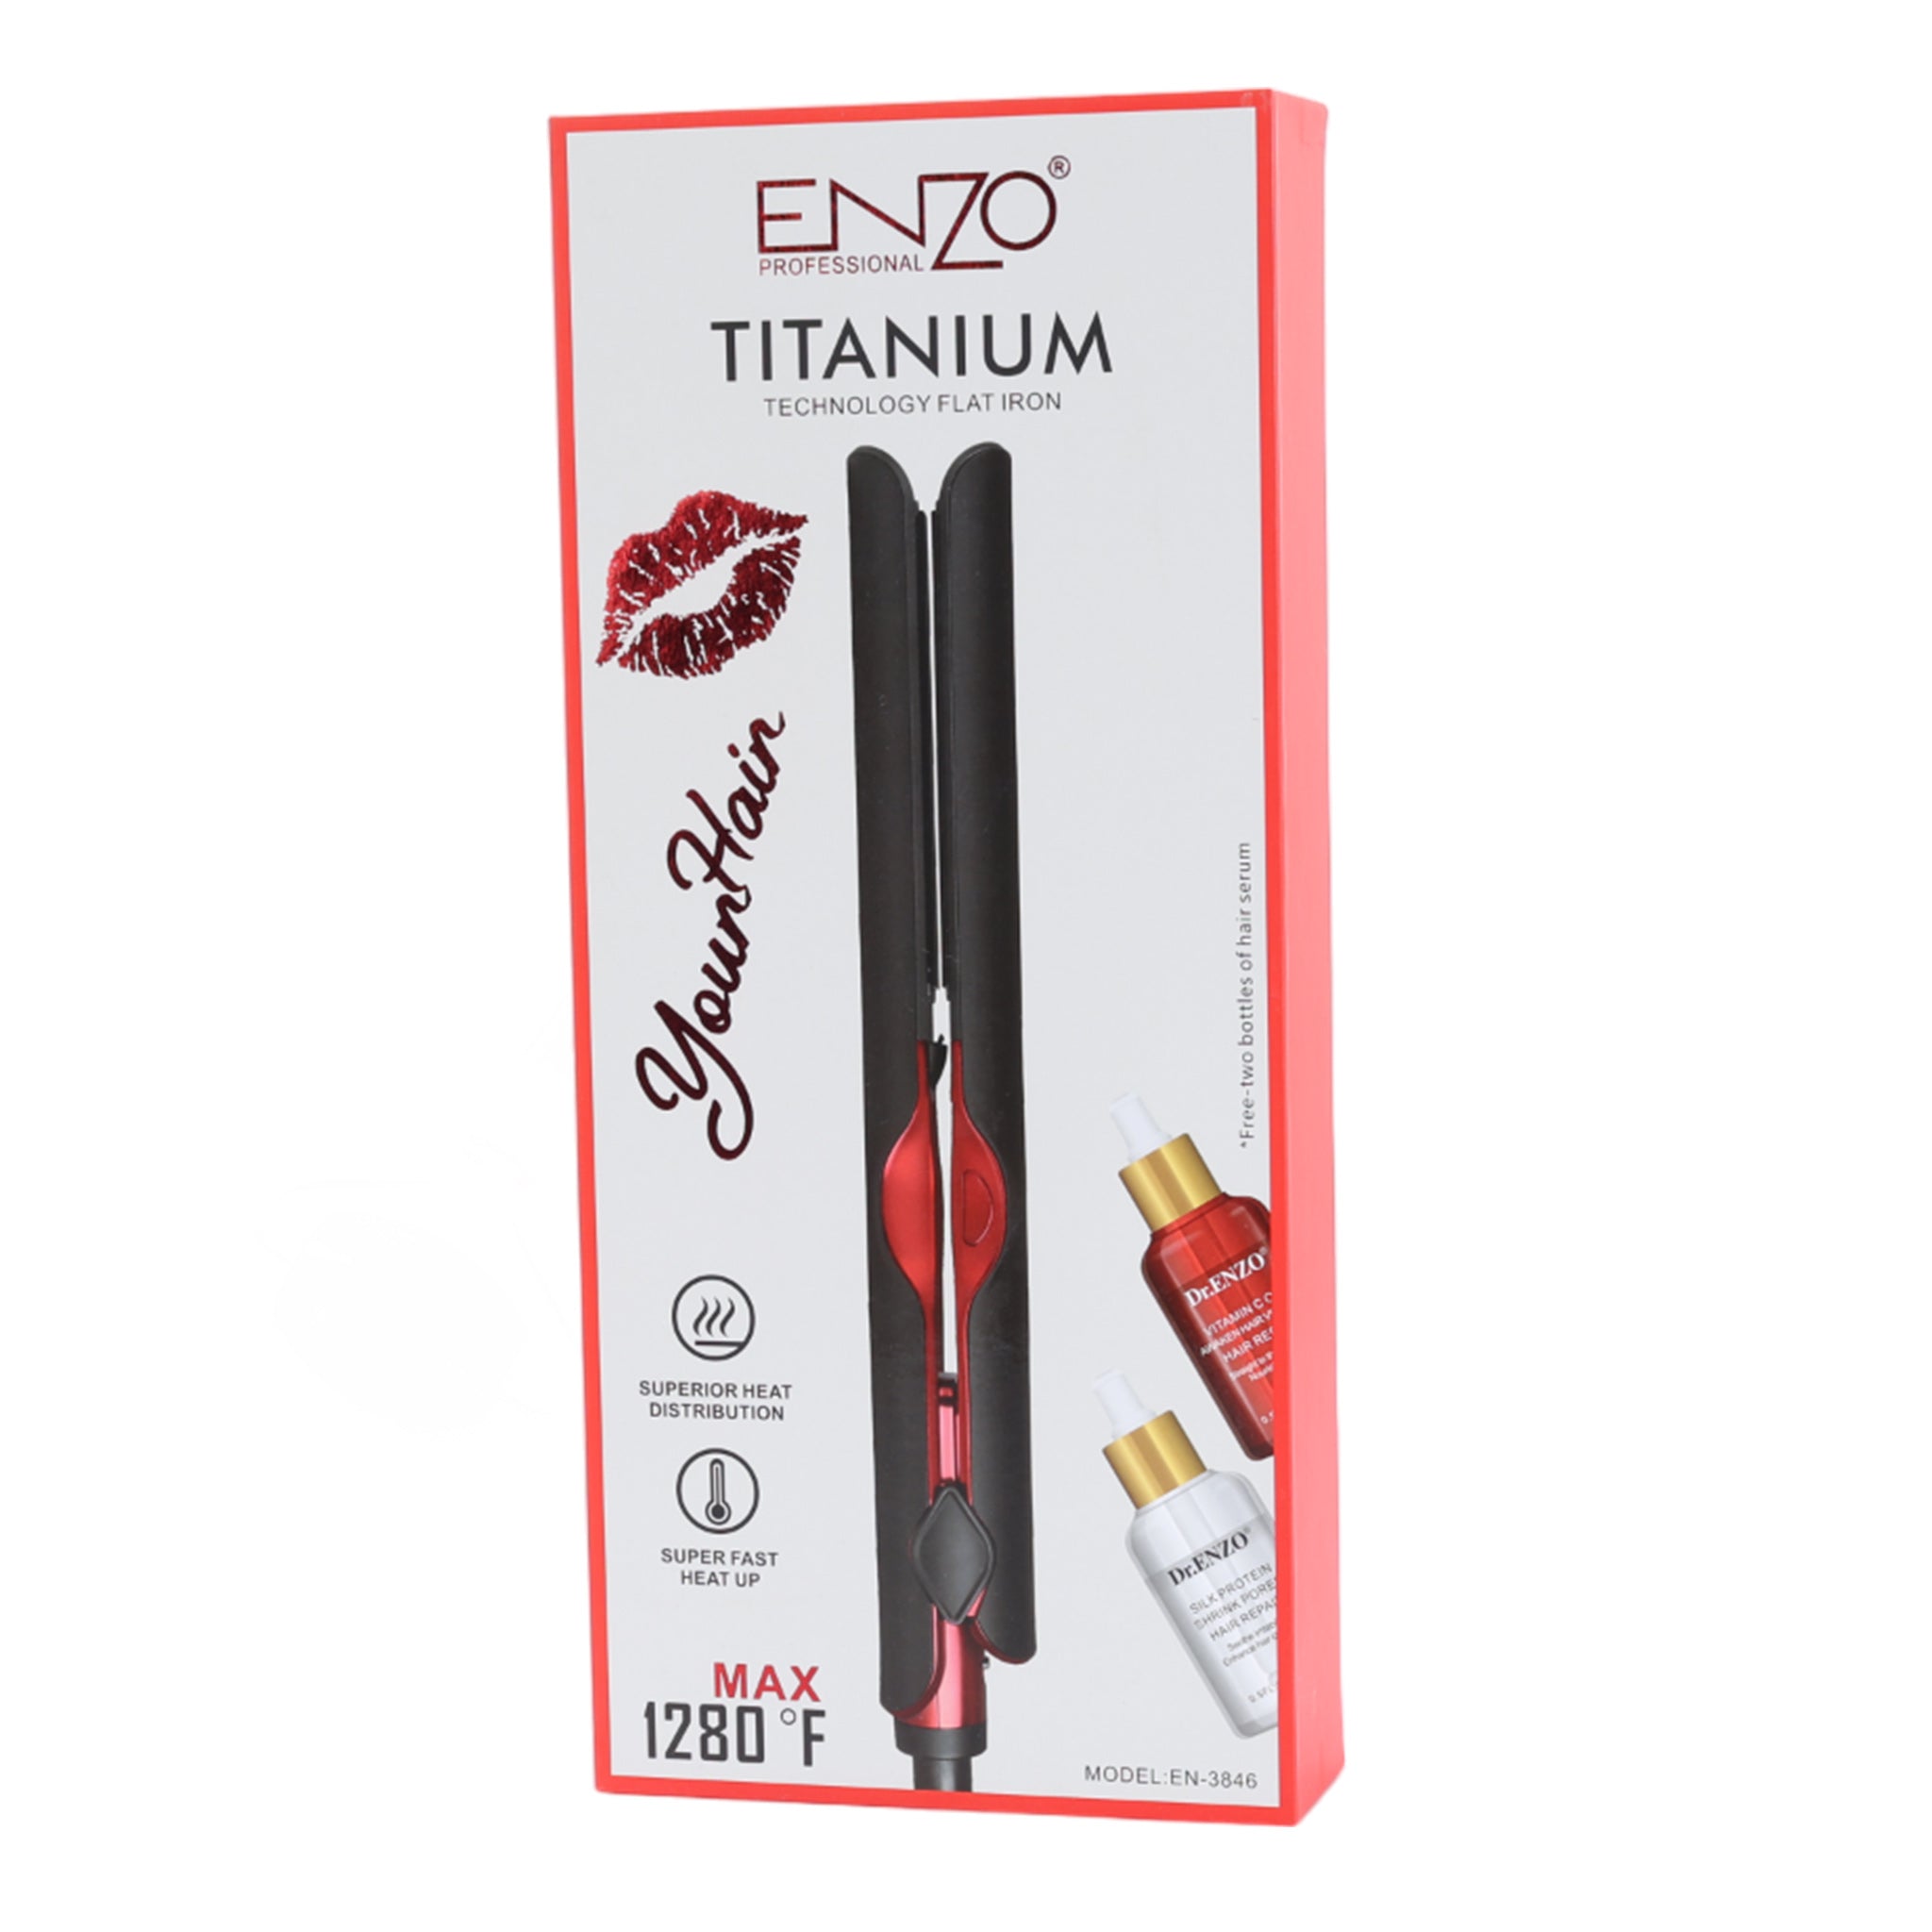 Enzo Titanium Technology Flat Iron & free 2 bottles of Hair serum